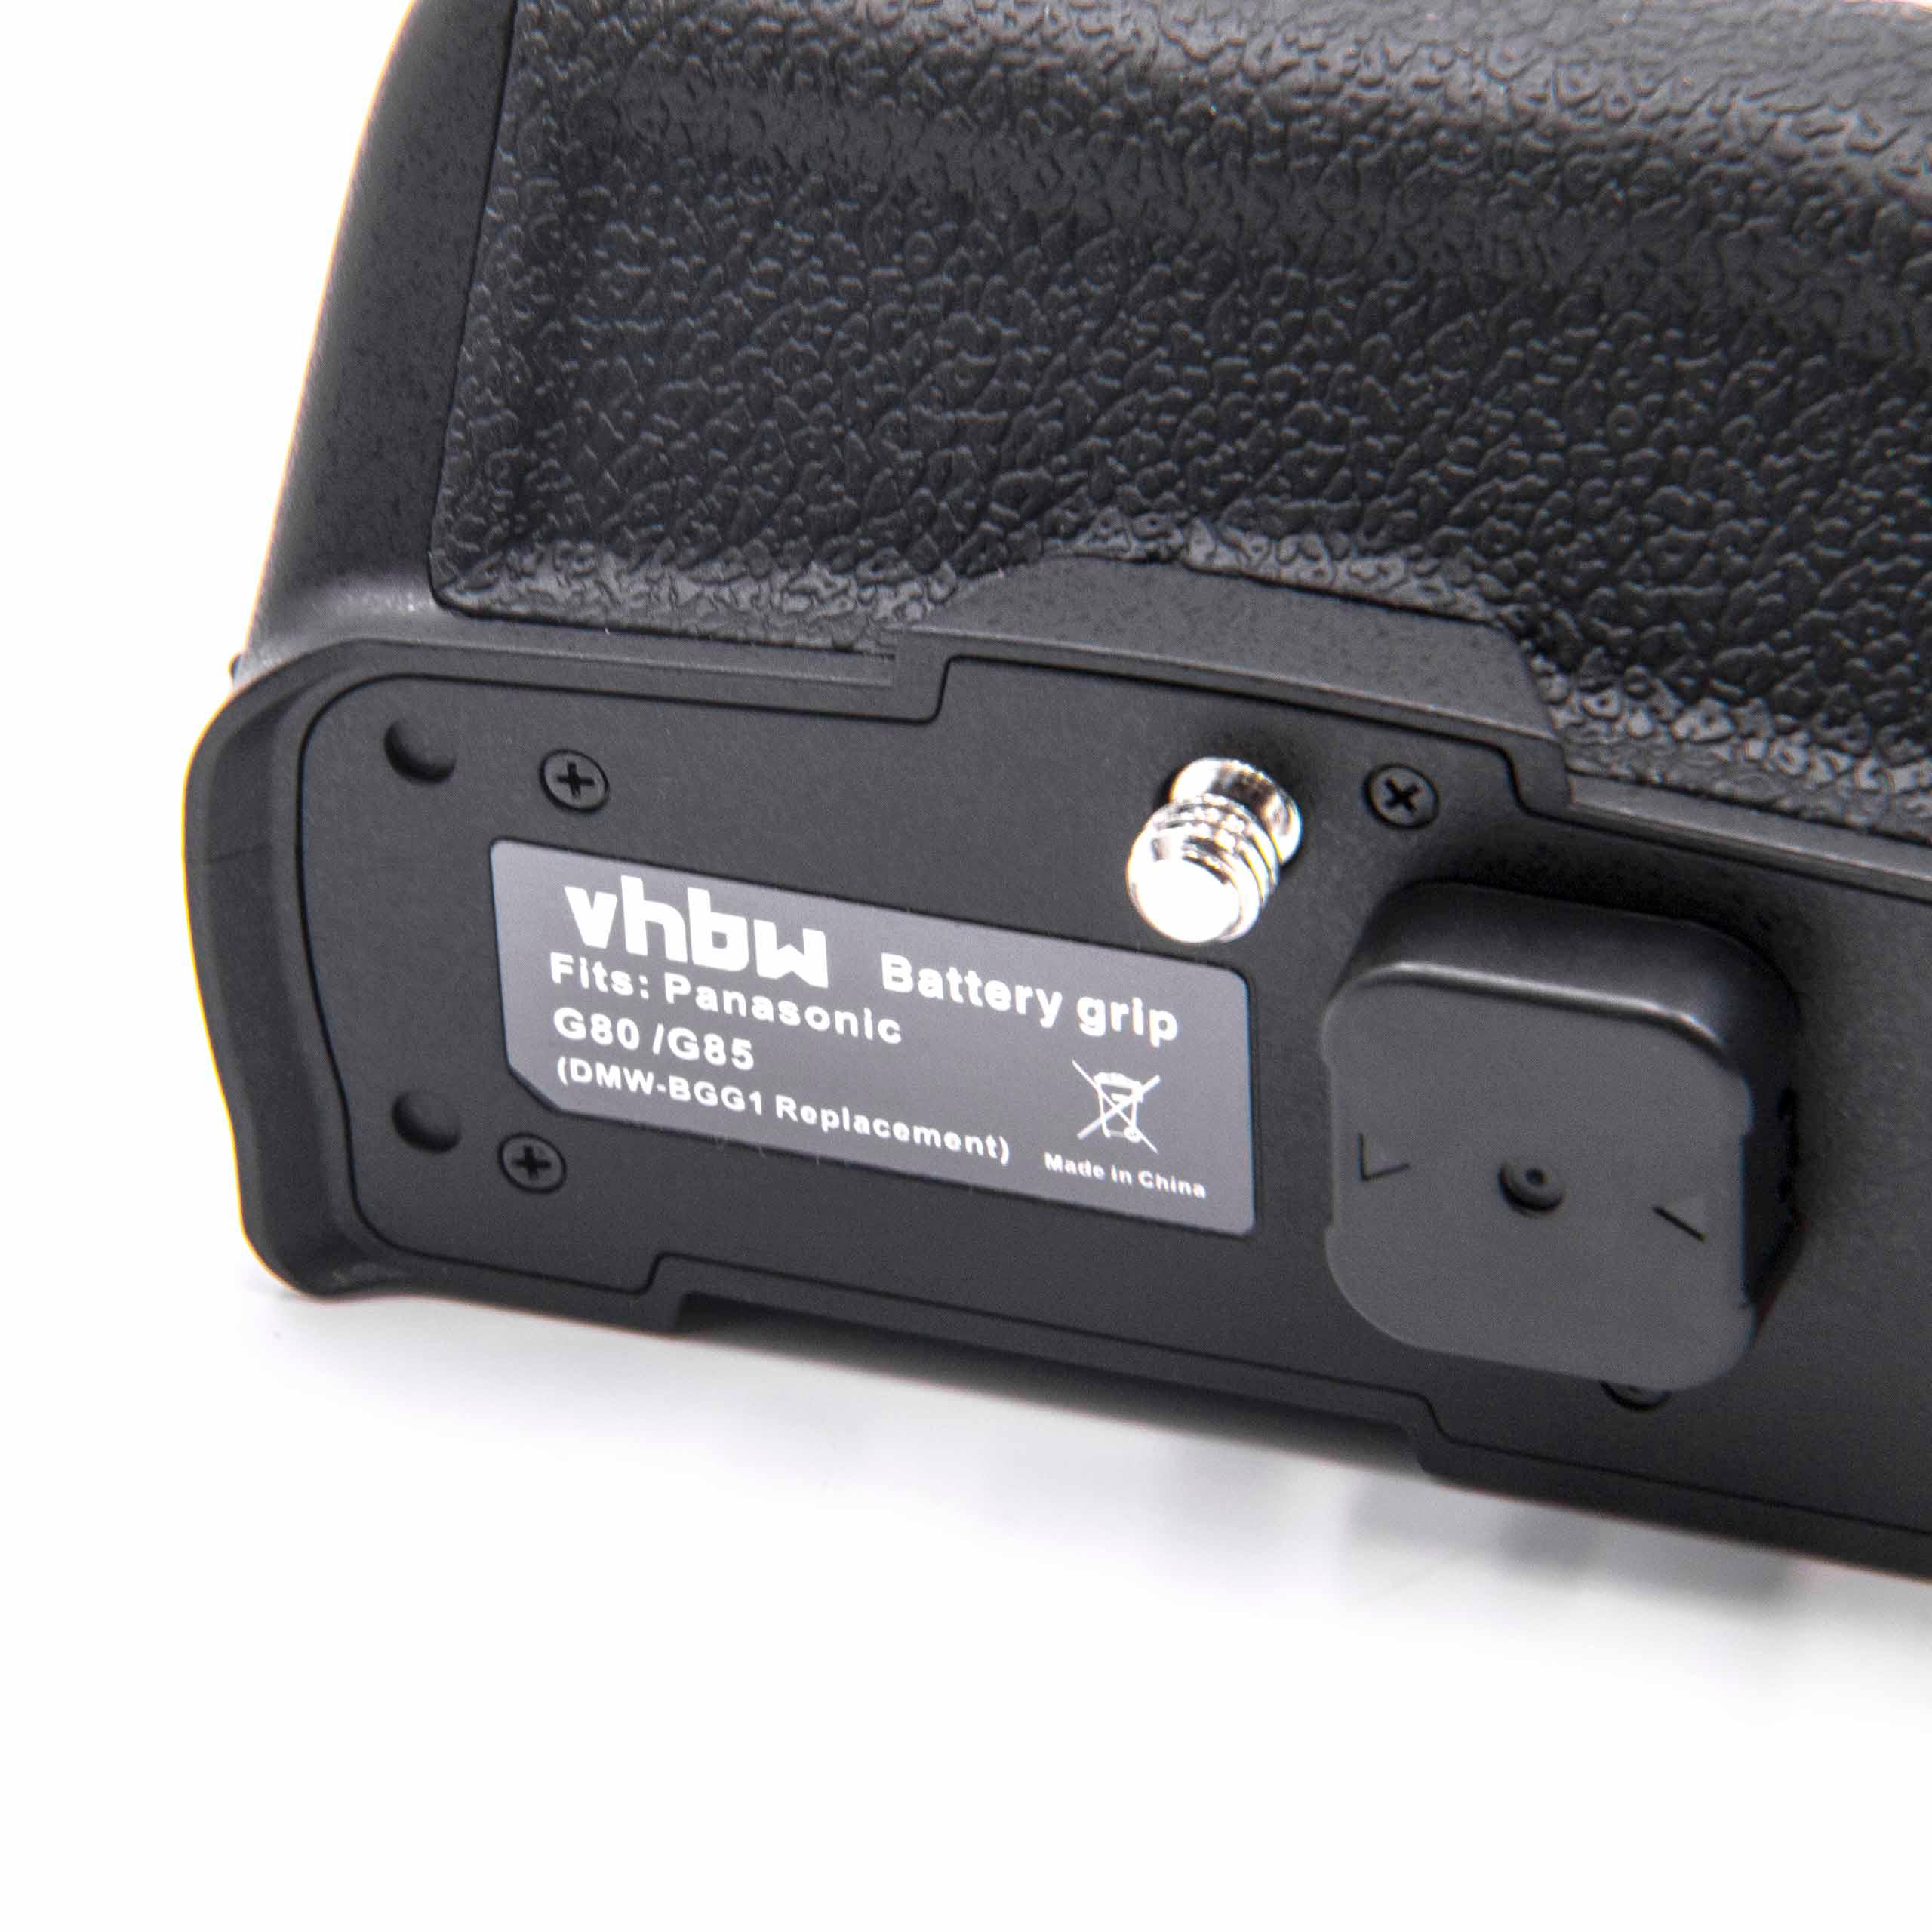 Battery Grip replaces Panasonic DMW-BGG1 for Panasonic Camera - Incl. Mode Dial